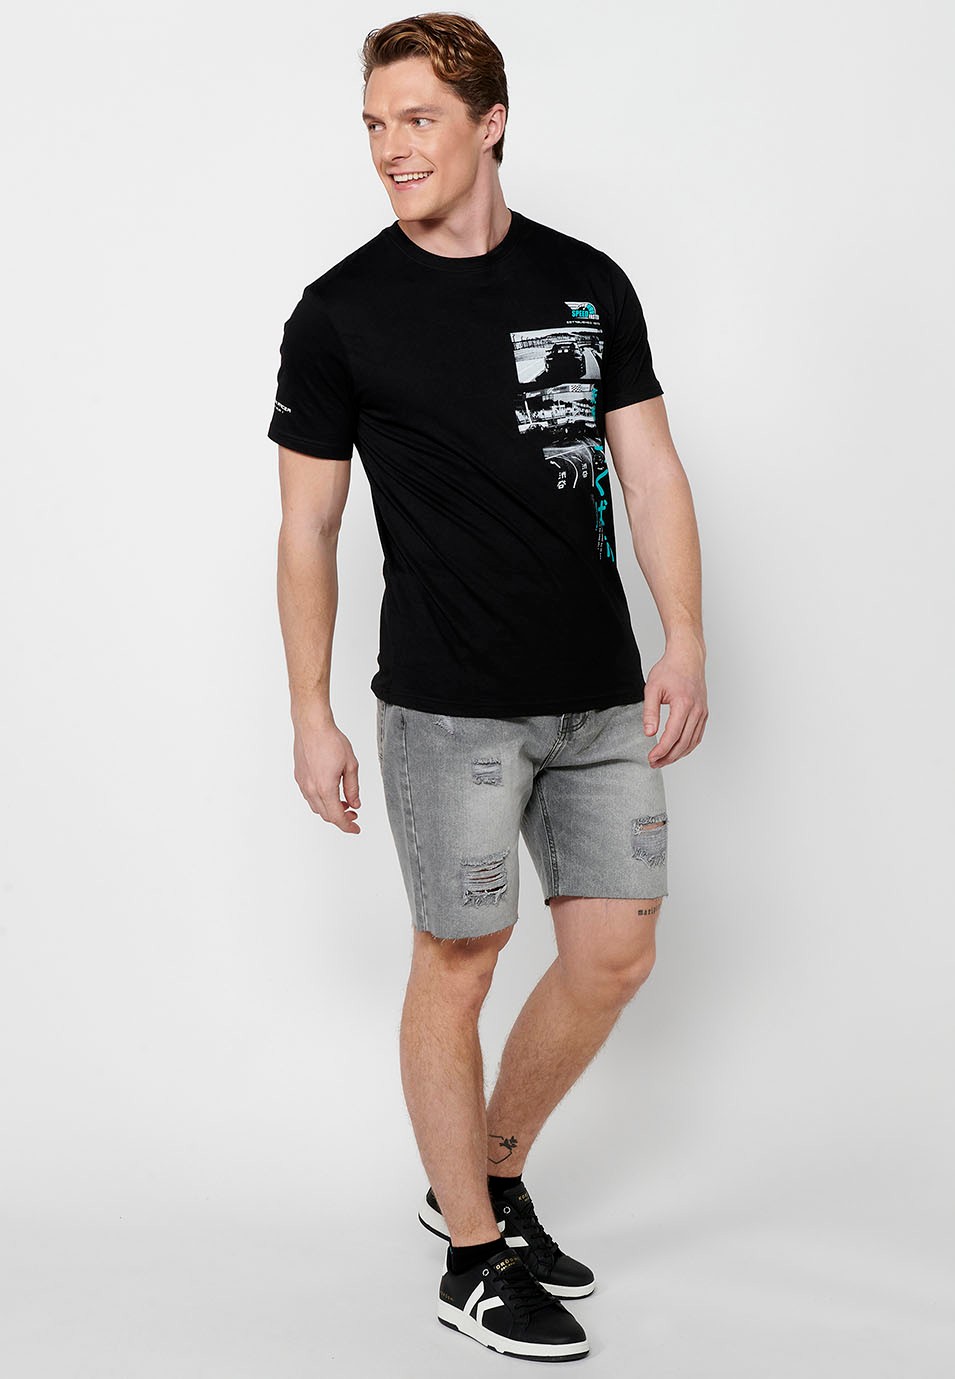 Short-sleeved cotton t-shirt, multicolored chest print, black color for men